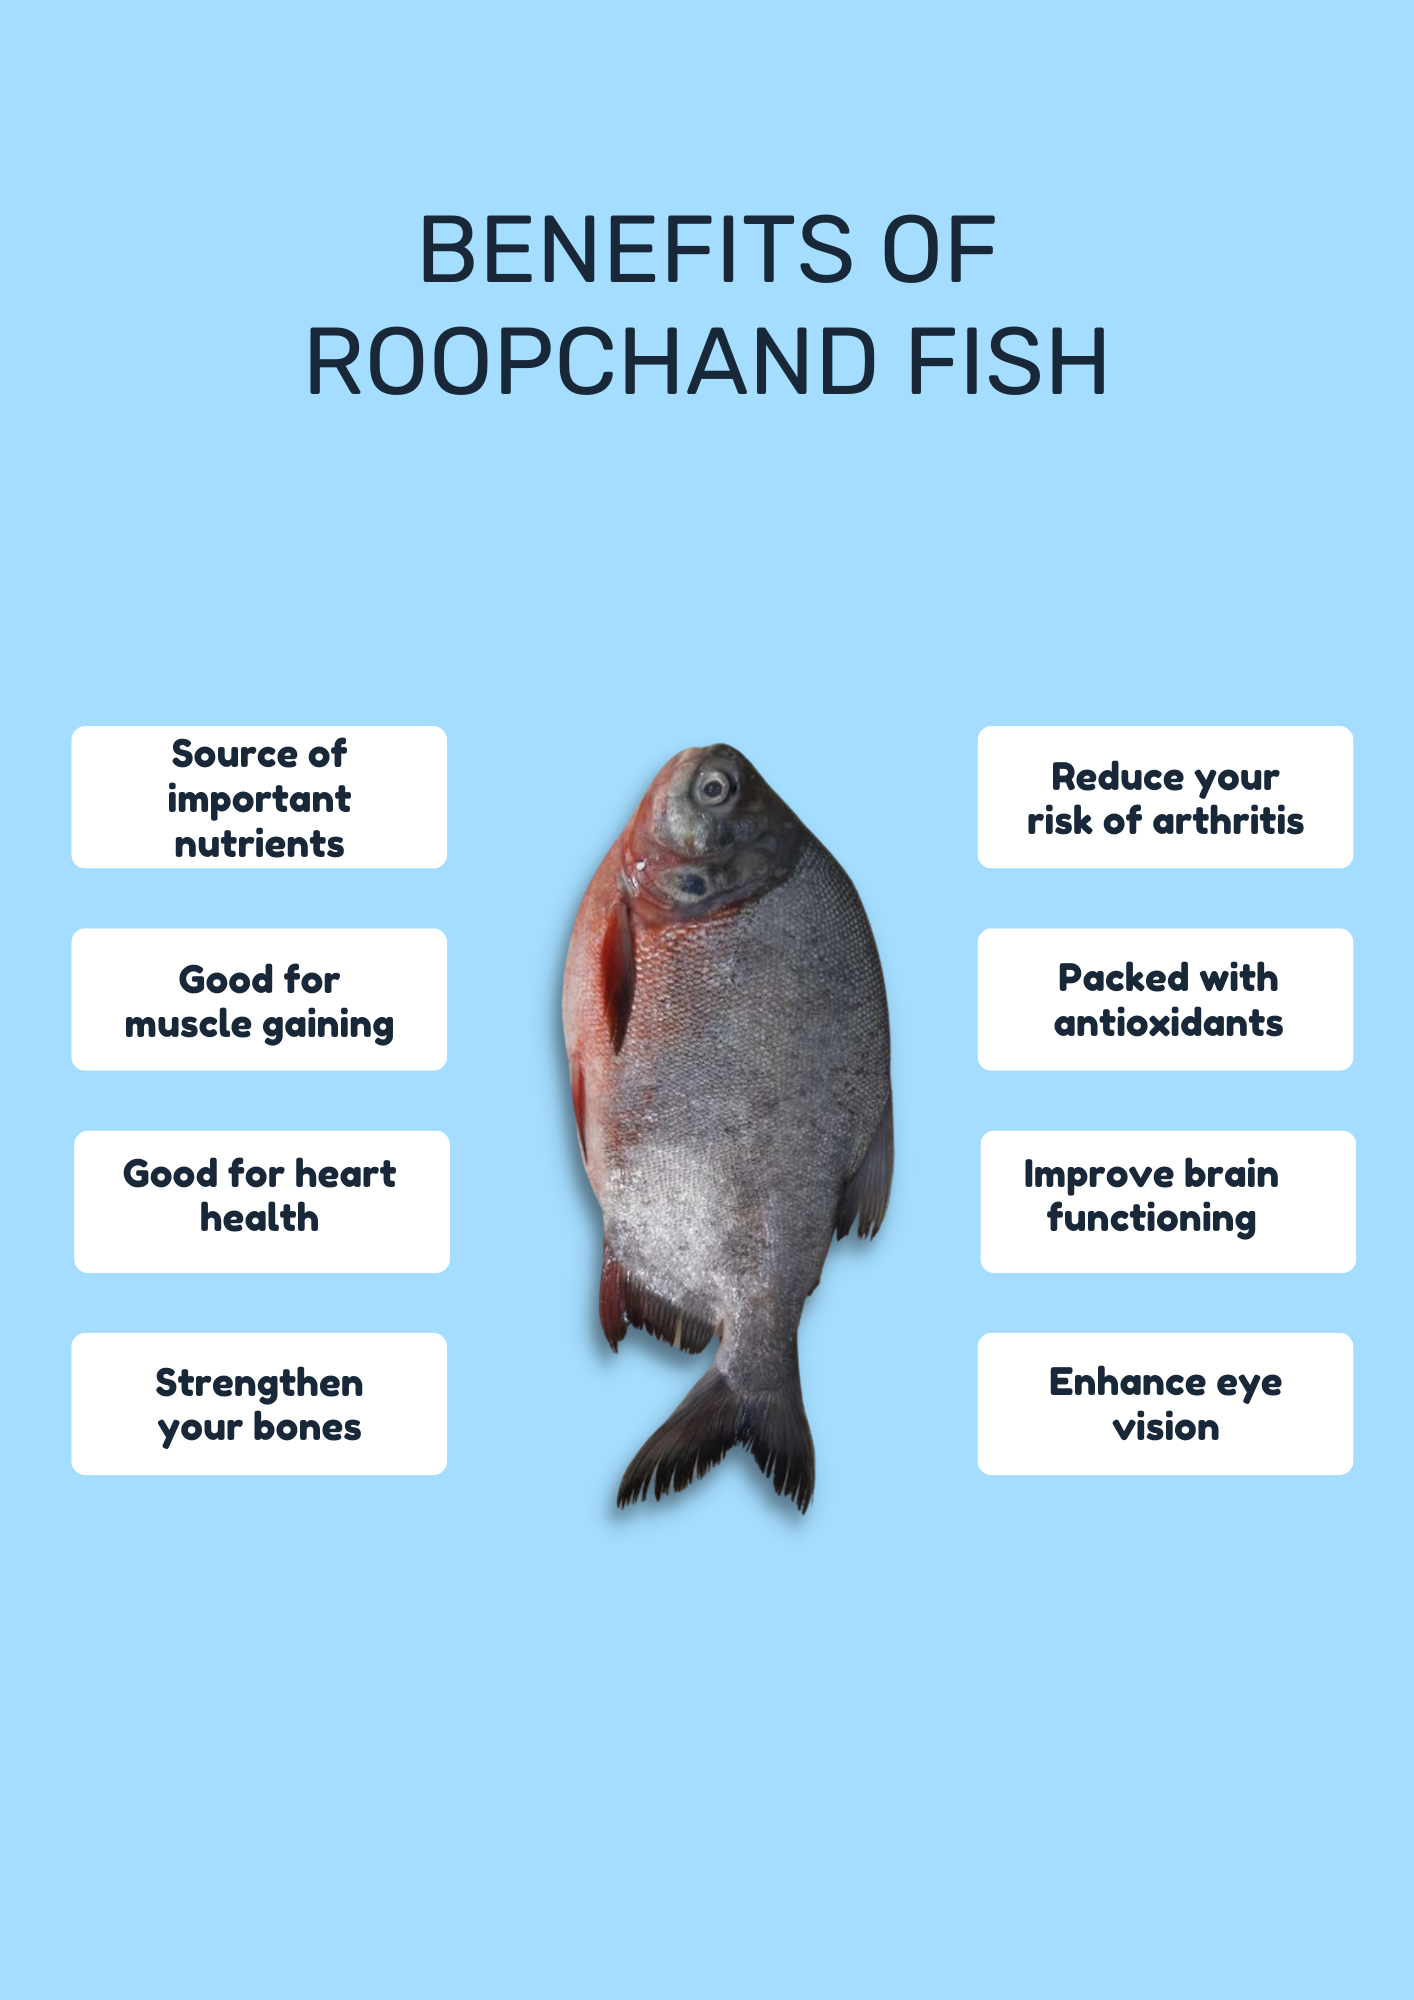 Benefits of roopchand fish